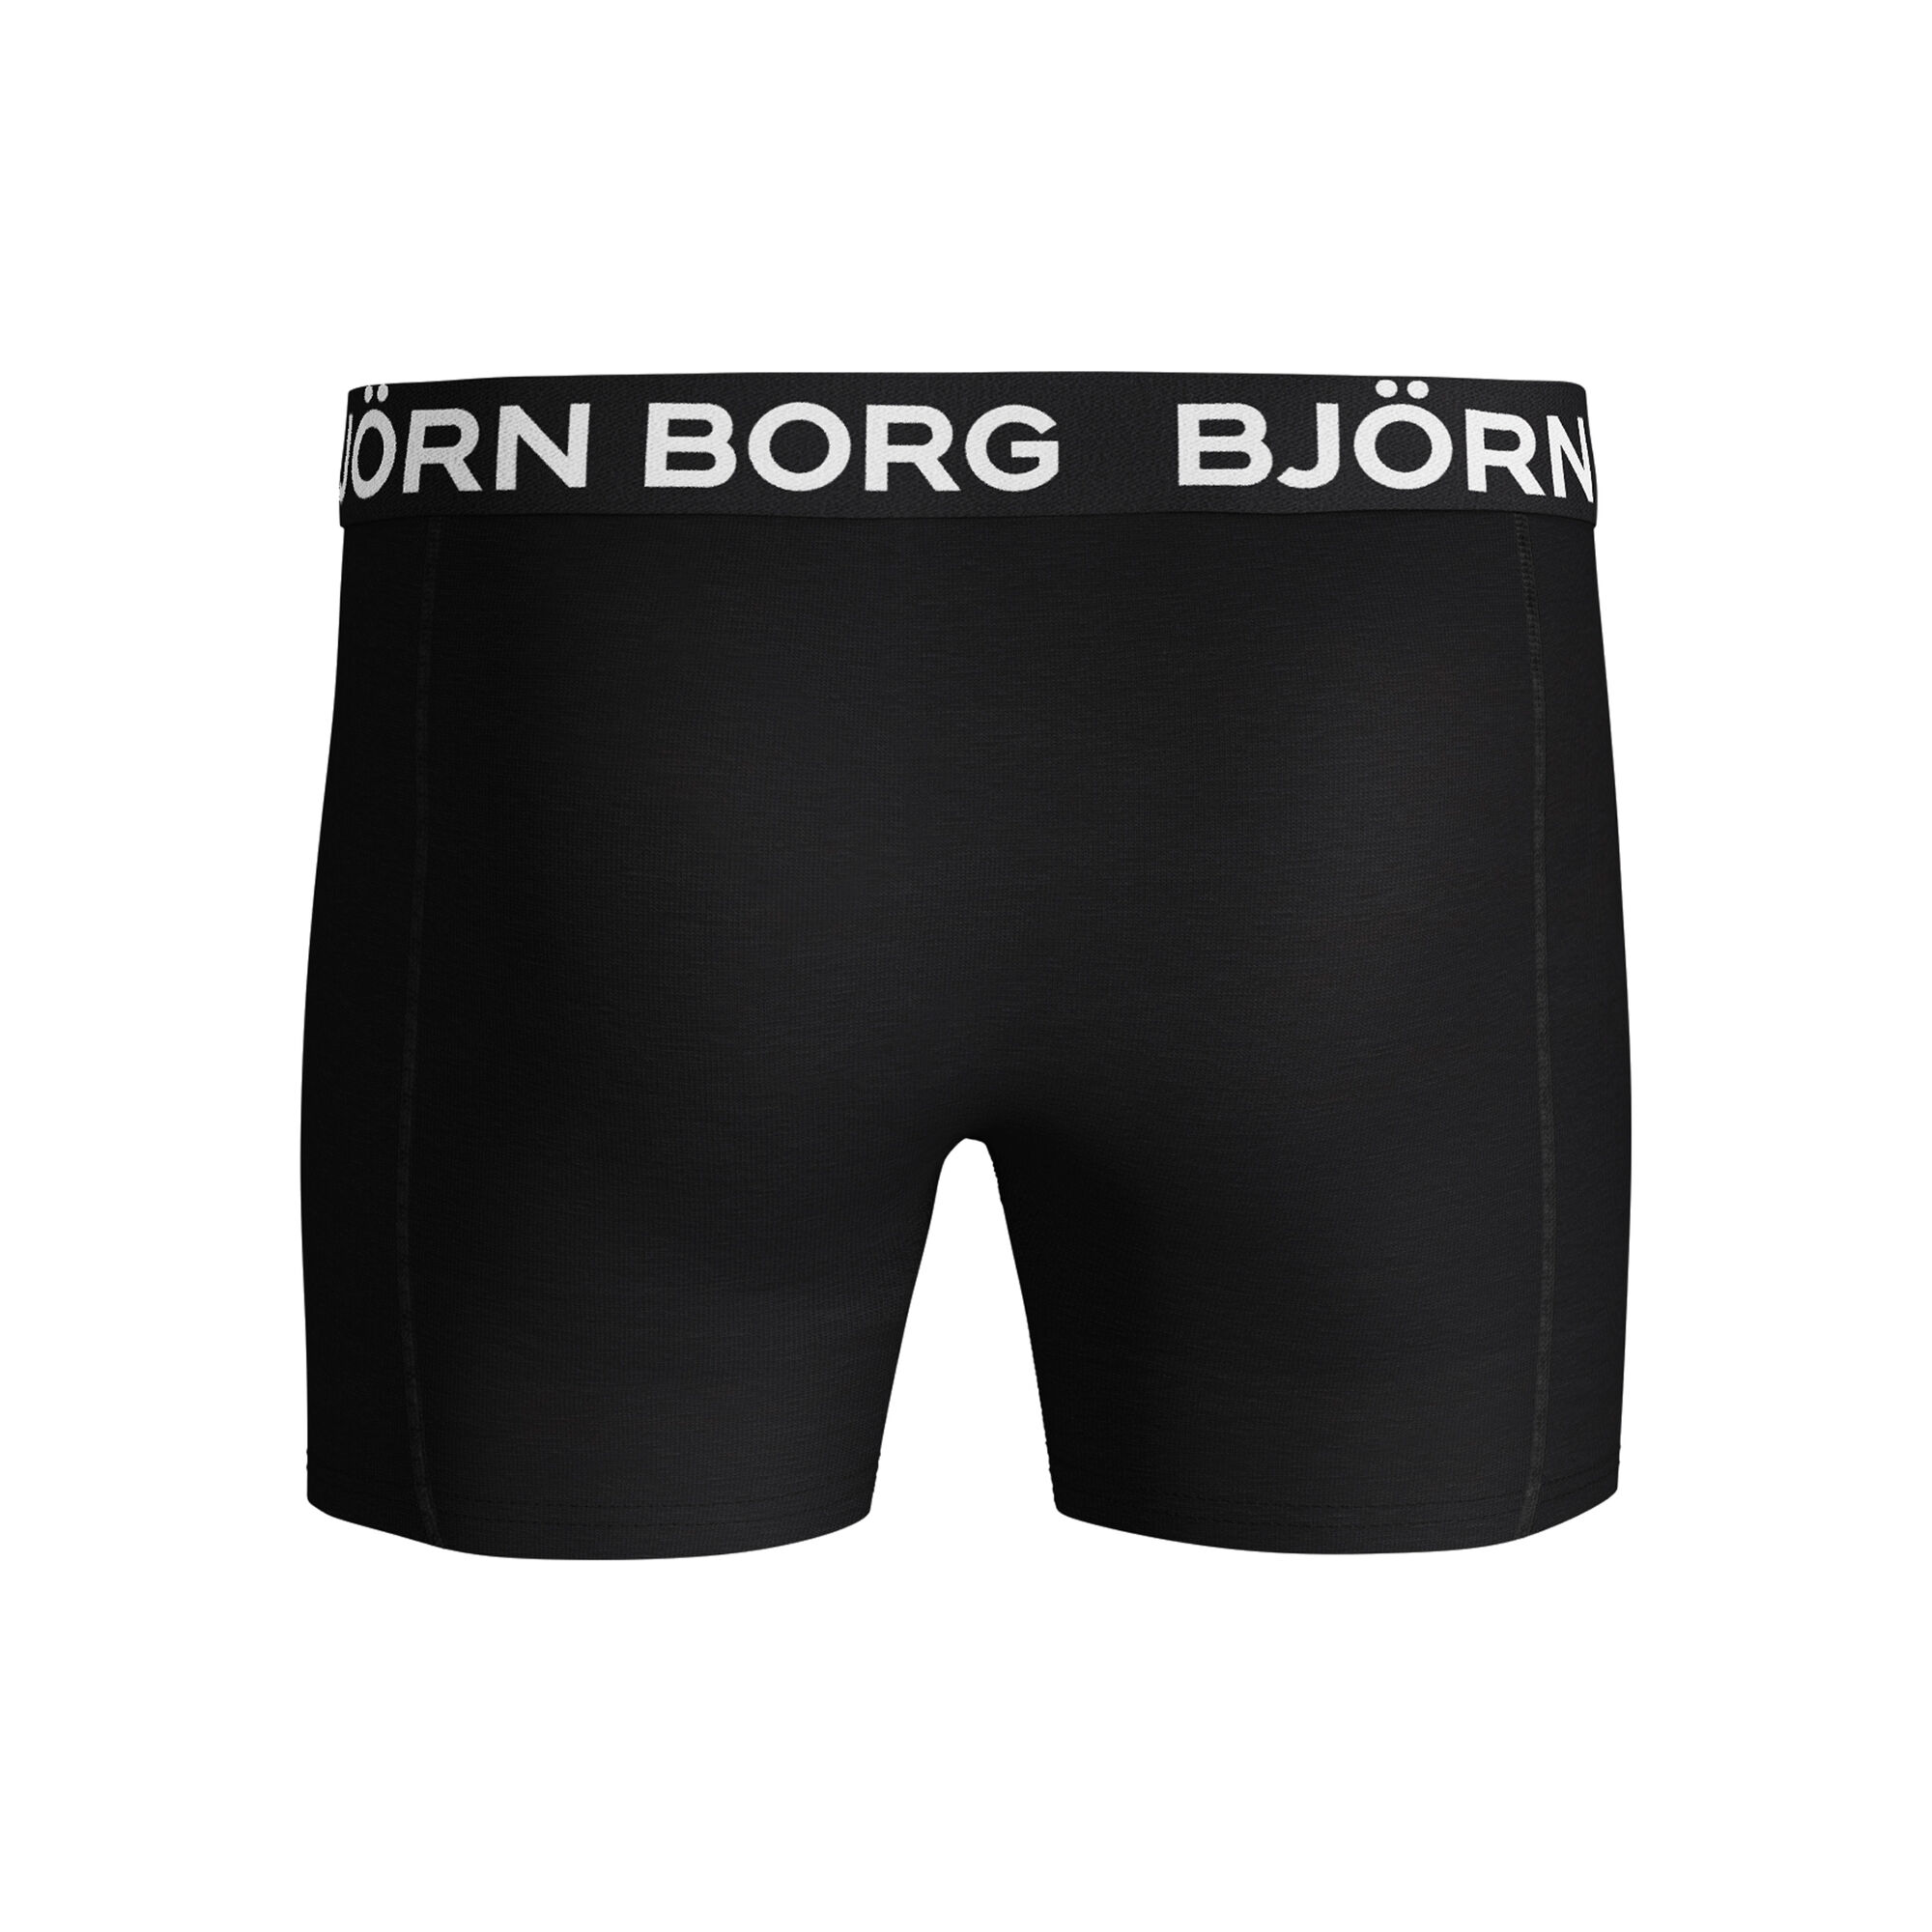 Piket Knipoog gesloten buy Björn Borg Noos Solids Boxer Shorts 2 Pack Men - Dark Blue, Black  online | Tennis-Point